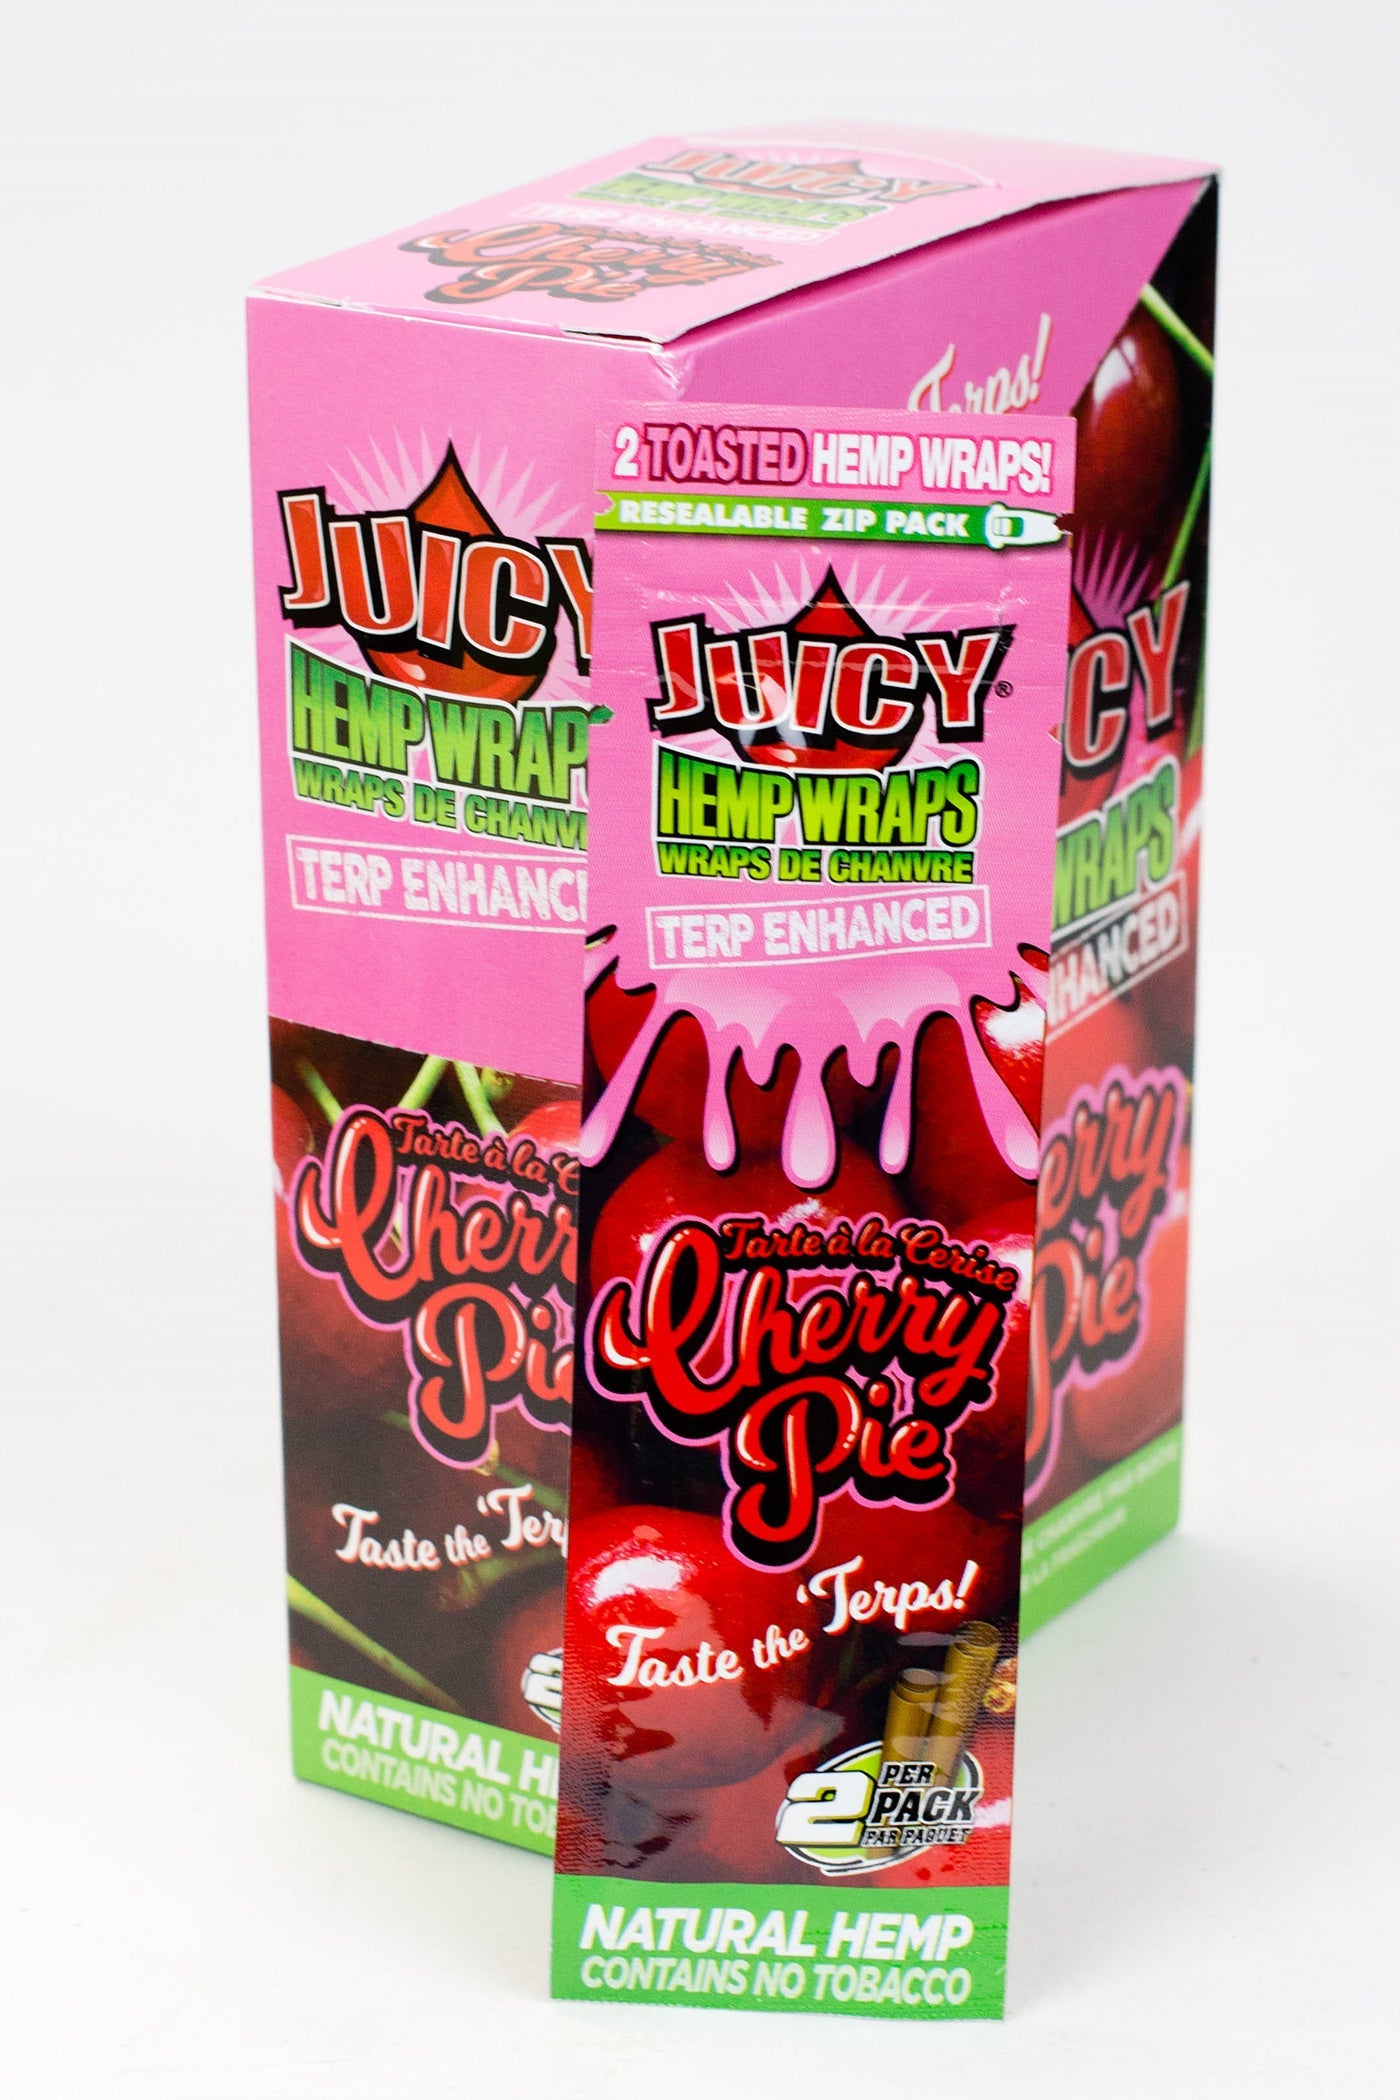 Juicy Jay's Hemp Wraps New flavors_3